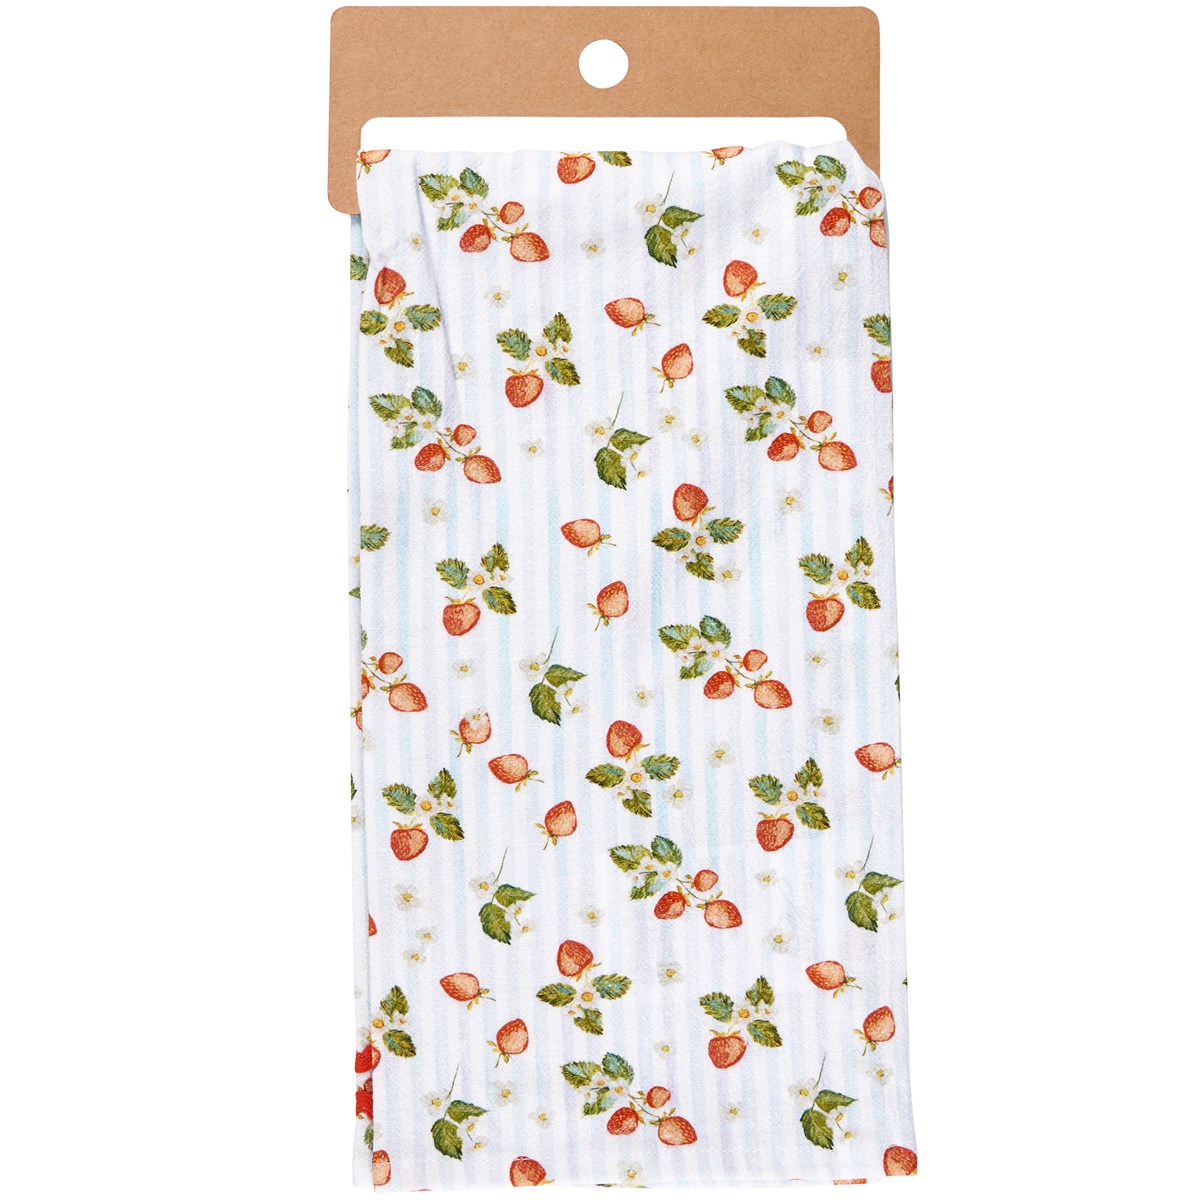 Berry Kitchen Towel - Cotton